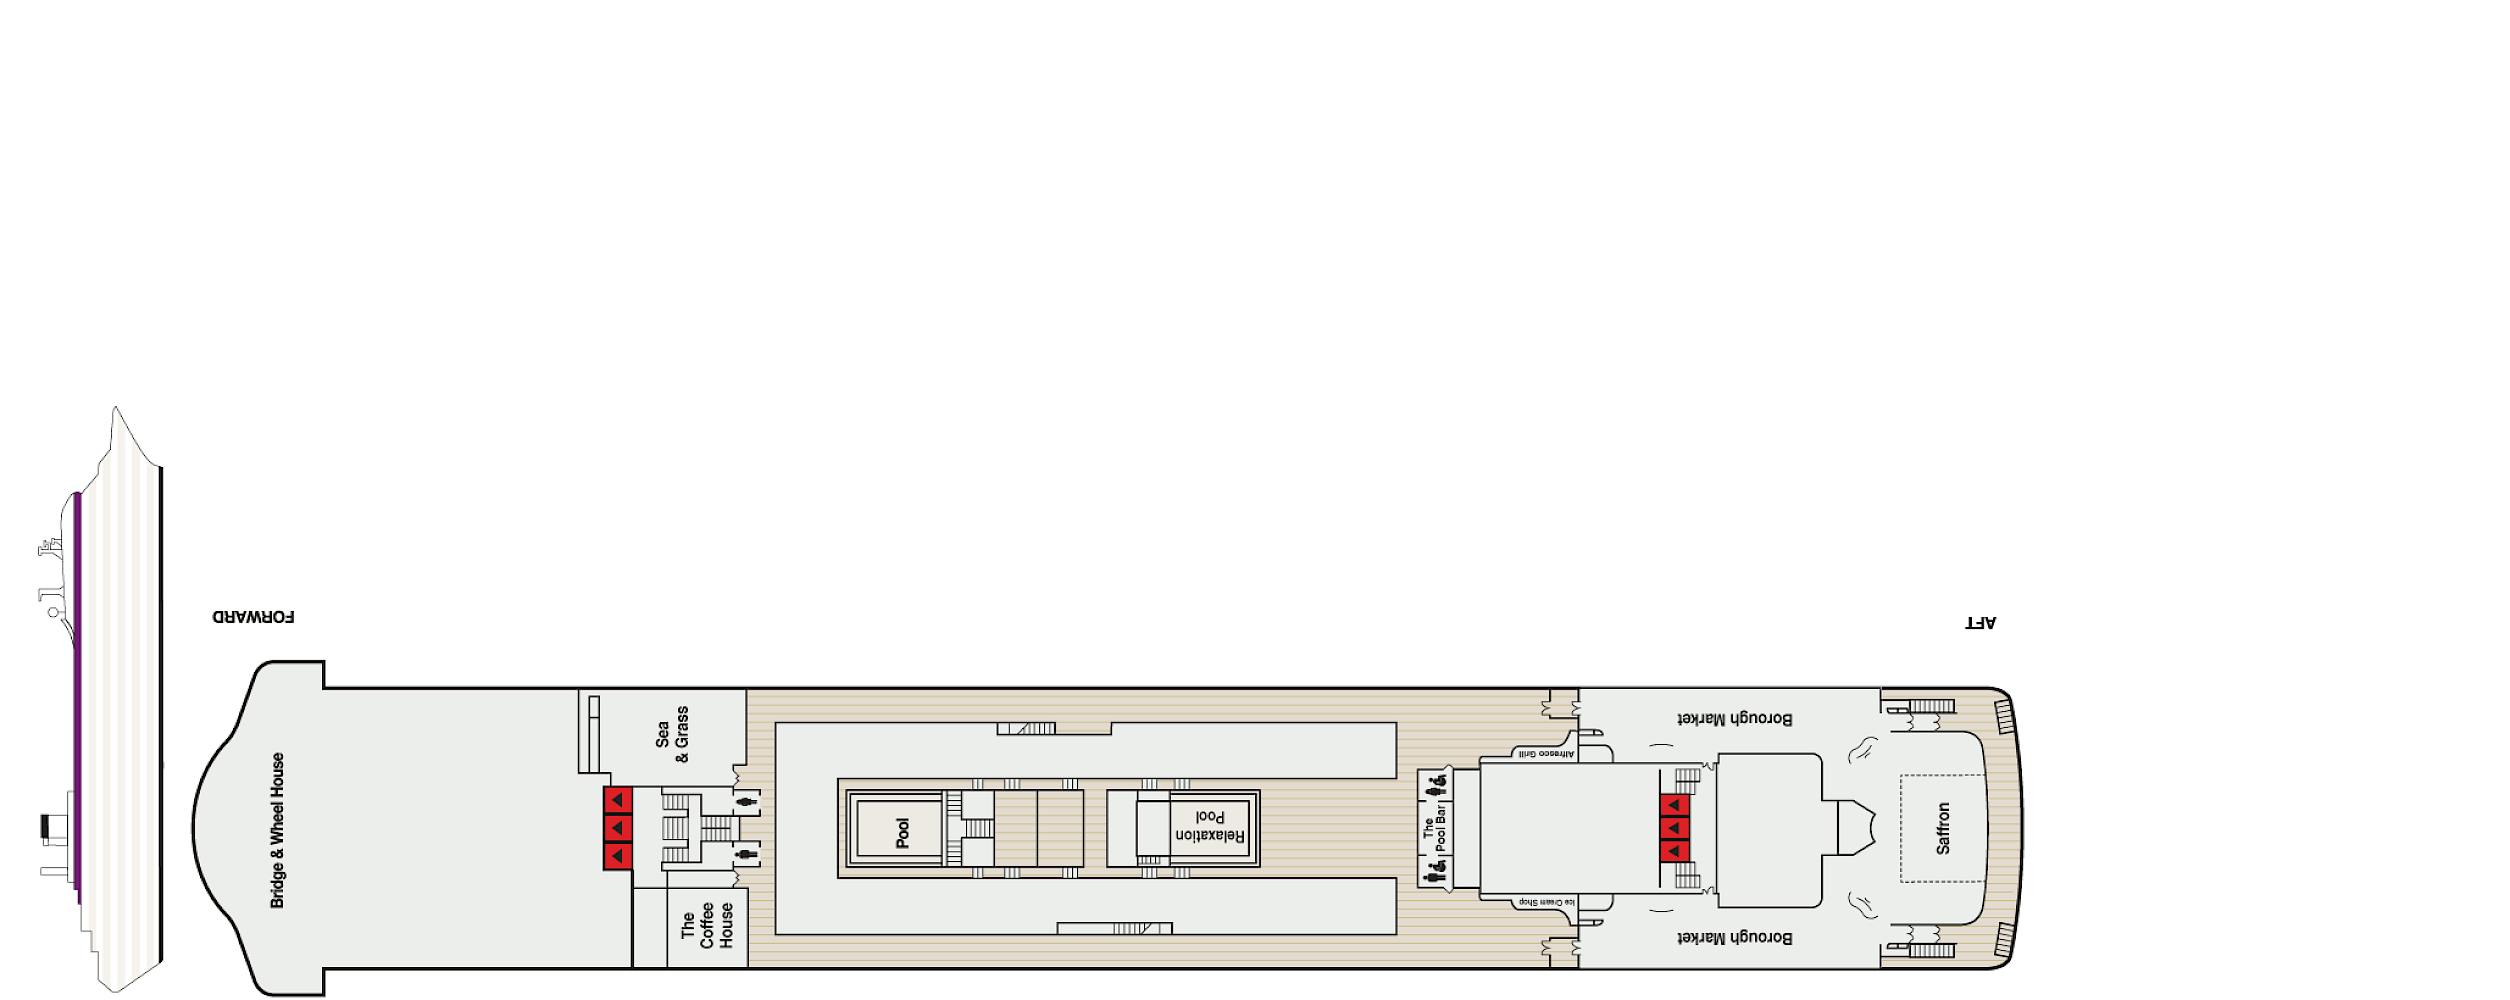 Deck 12 - The Lido Deck